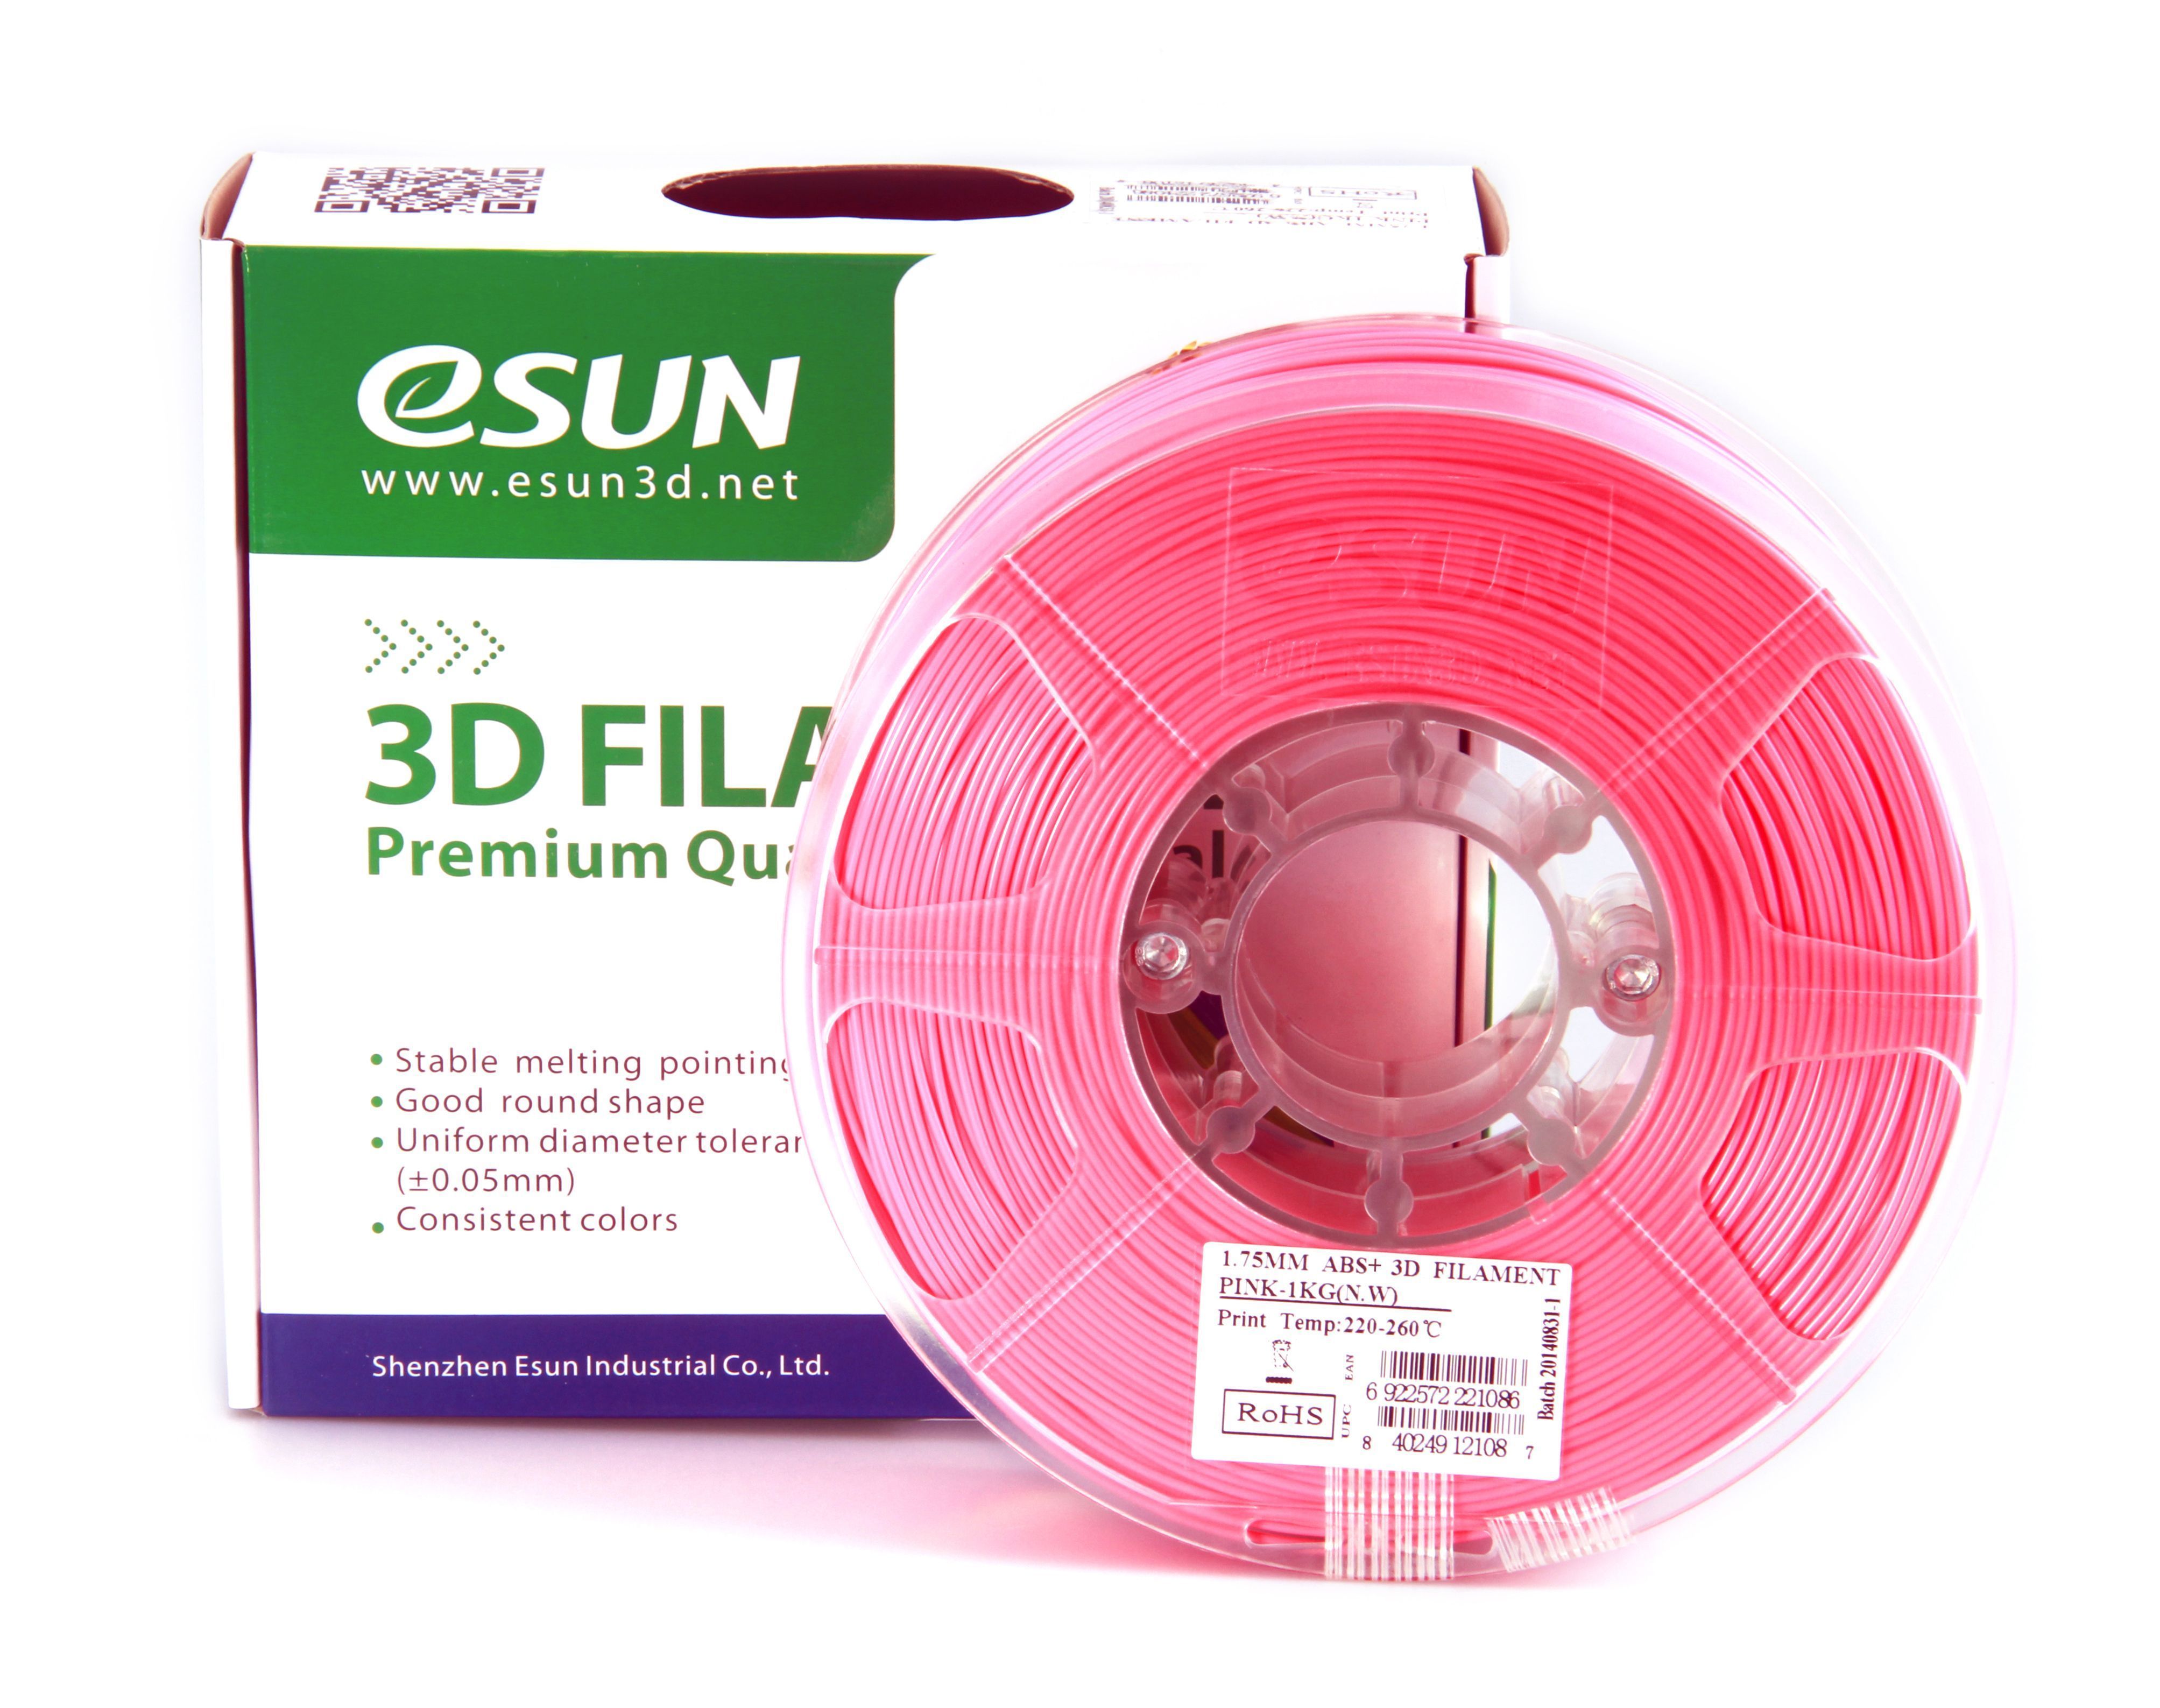 Катушка ABS+ пластика Esun, 1.75 мм, 1 кг, розовая